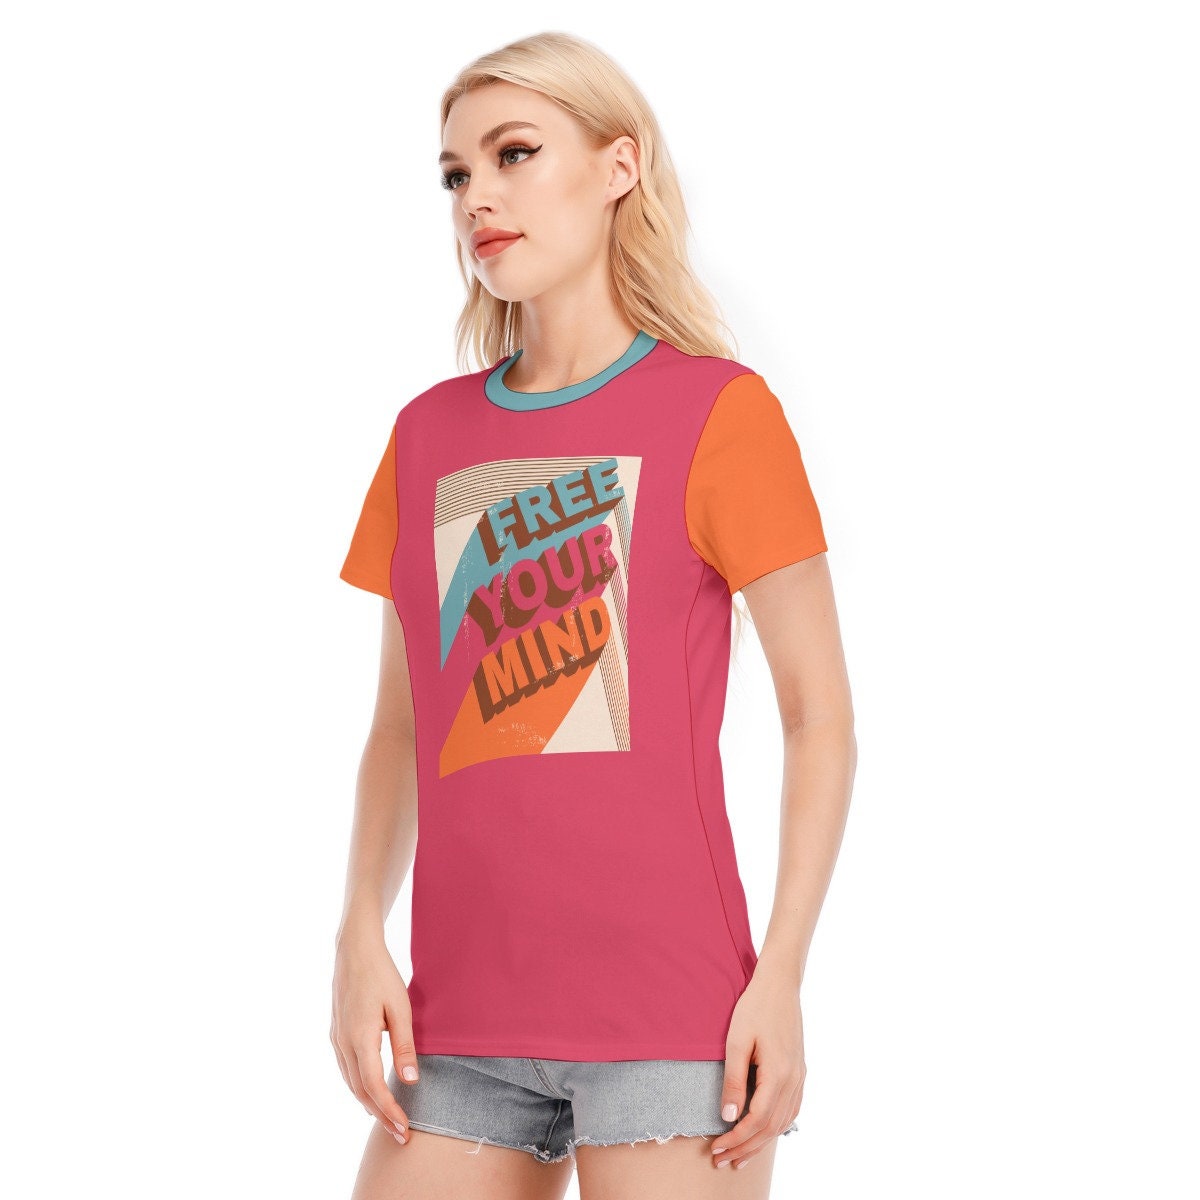 T-shirt rétro, T-shirts mots, T-shirt mots vintage, T-shirt mots roses, Tshirt hippie femmes, T-shirt style vintage, T-shirt rose fuchsia